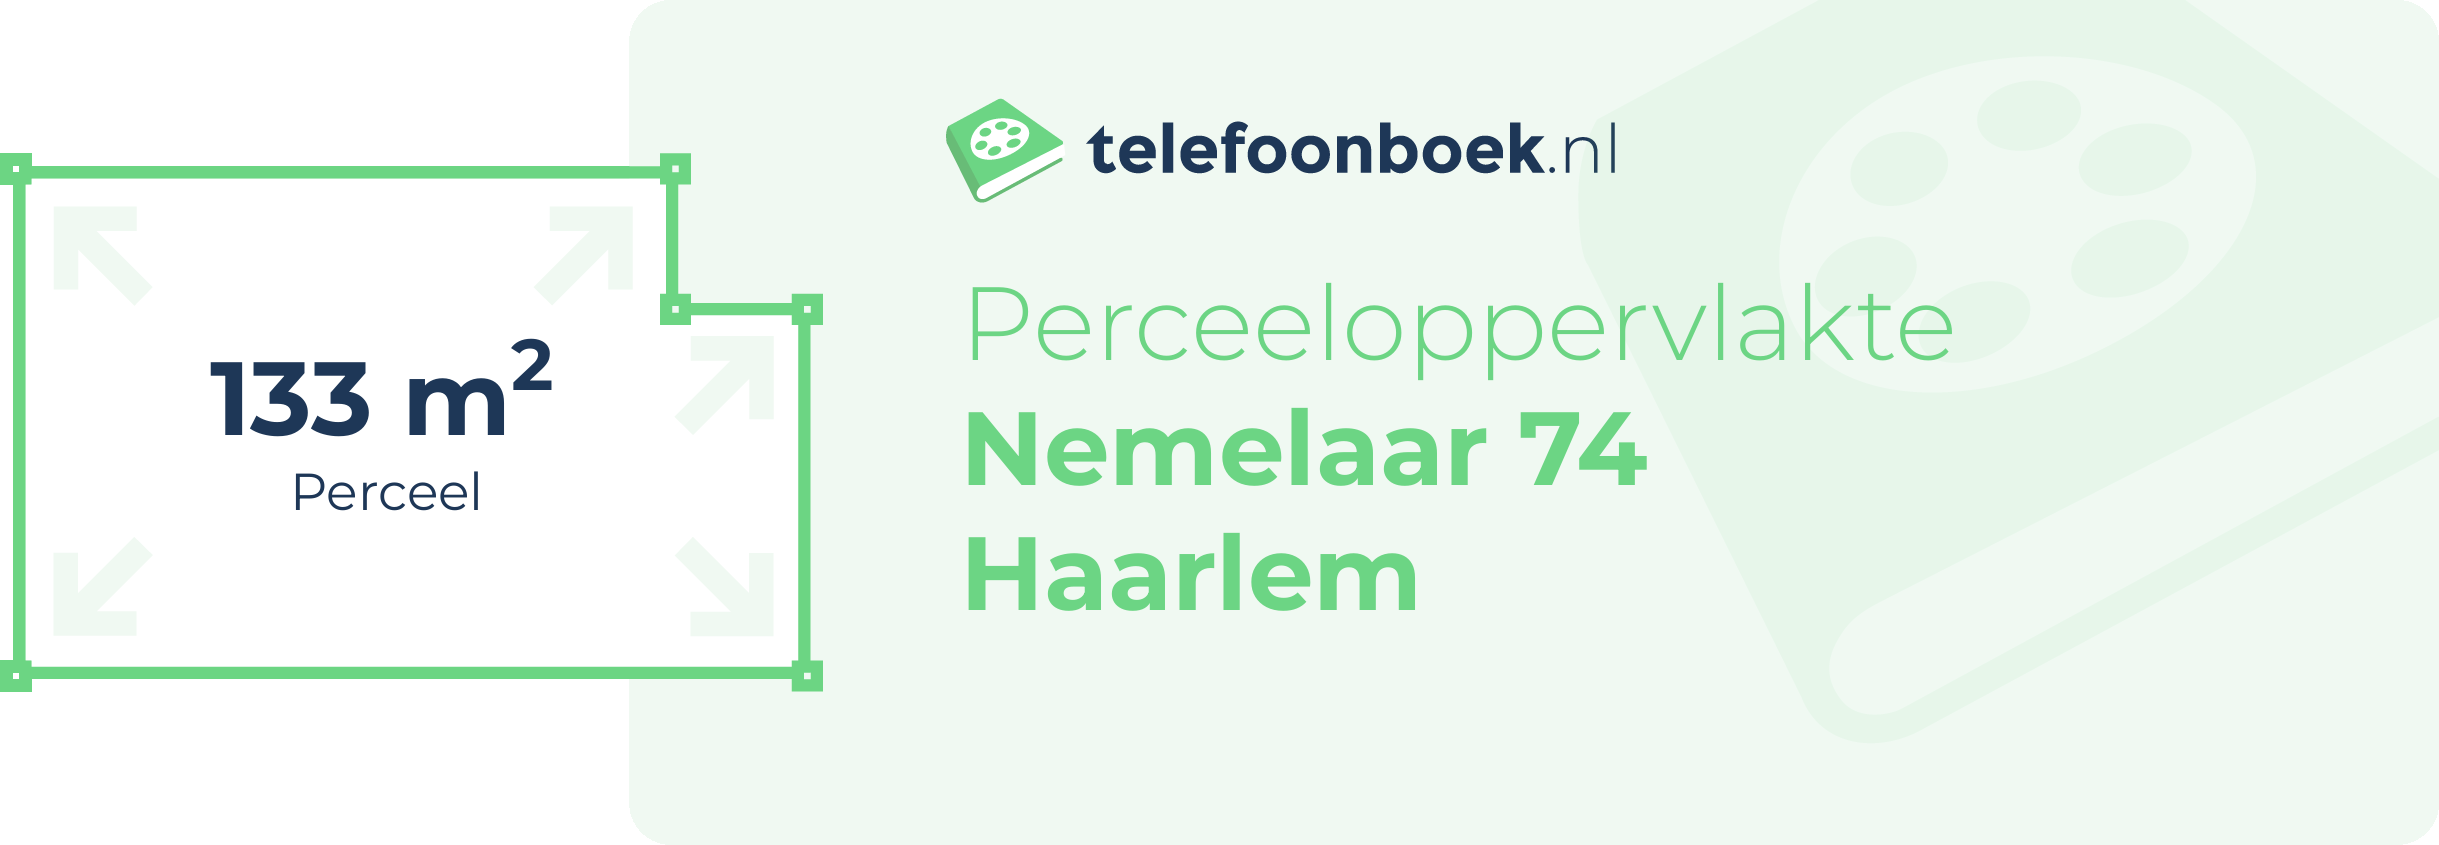 Perceeloppervlakte Nemelaar 74 Haarlem